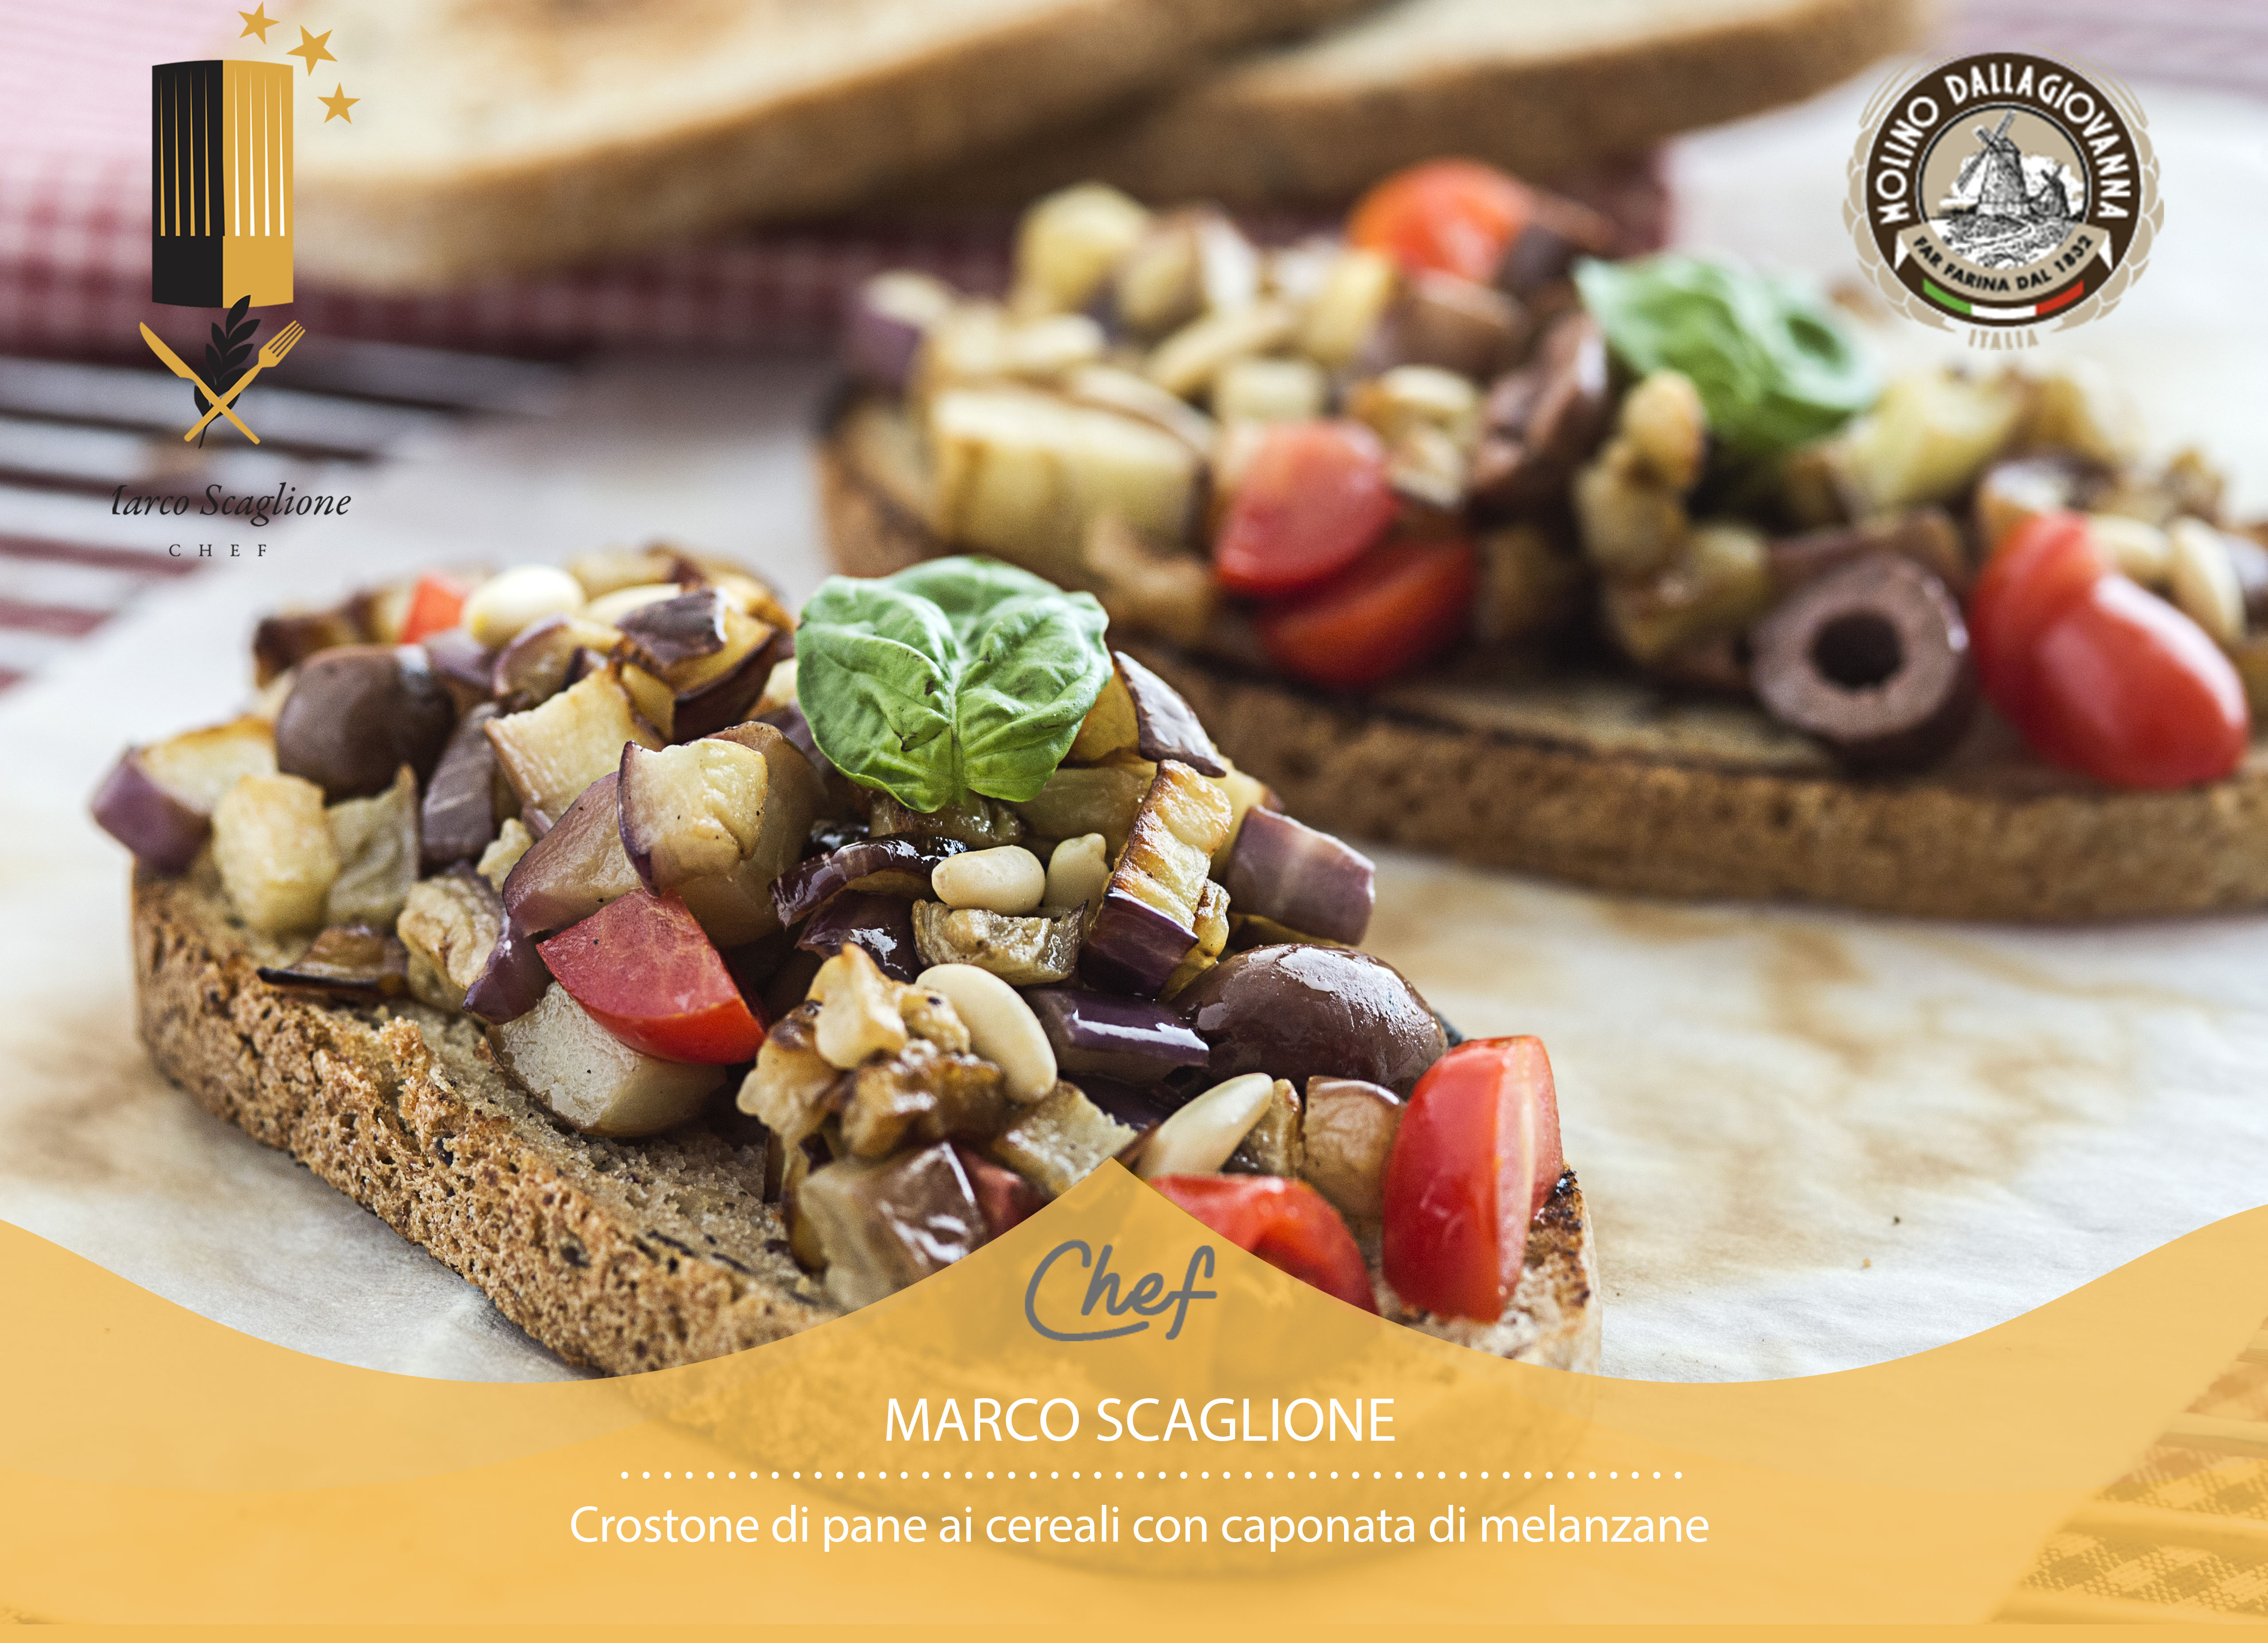 Cereal bread crostone with eggplant caponata, raisins and pine nuts